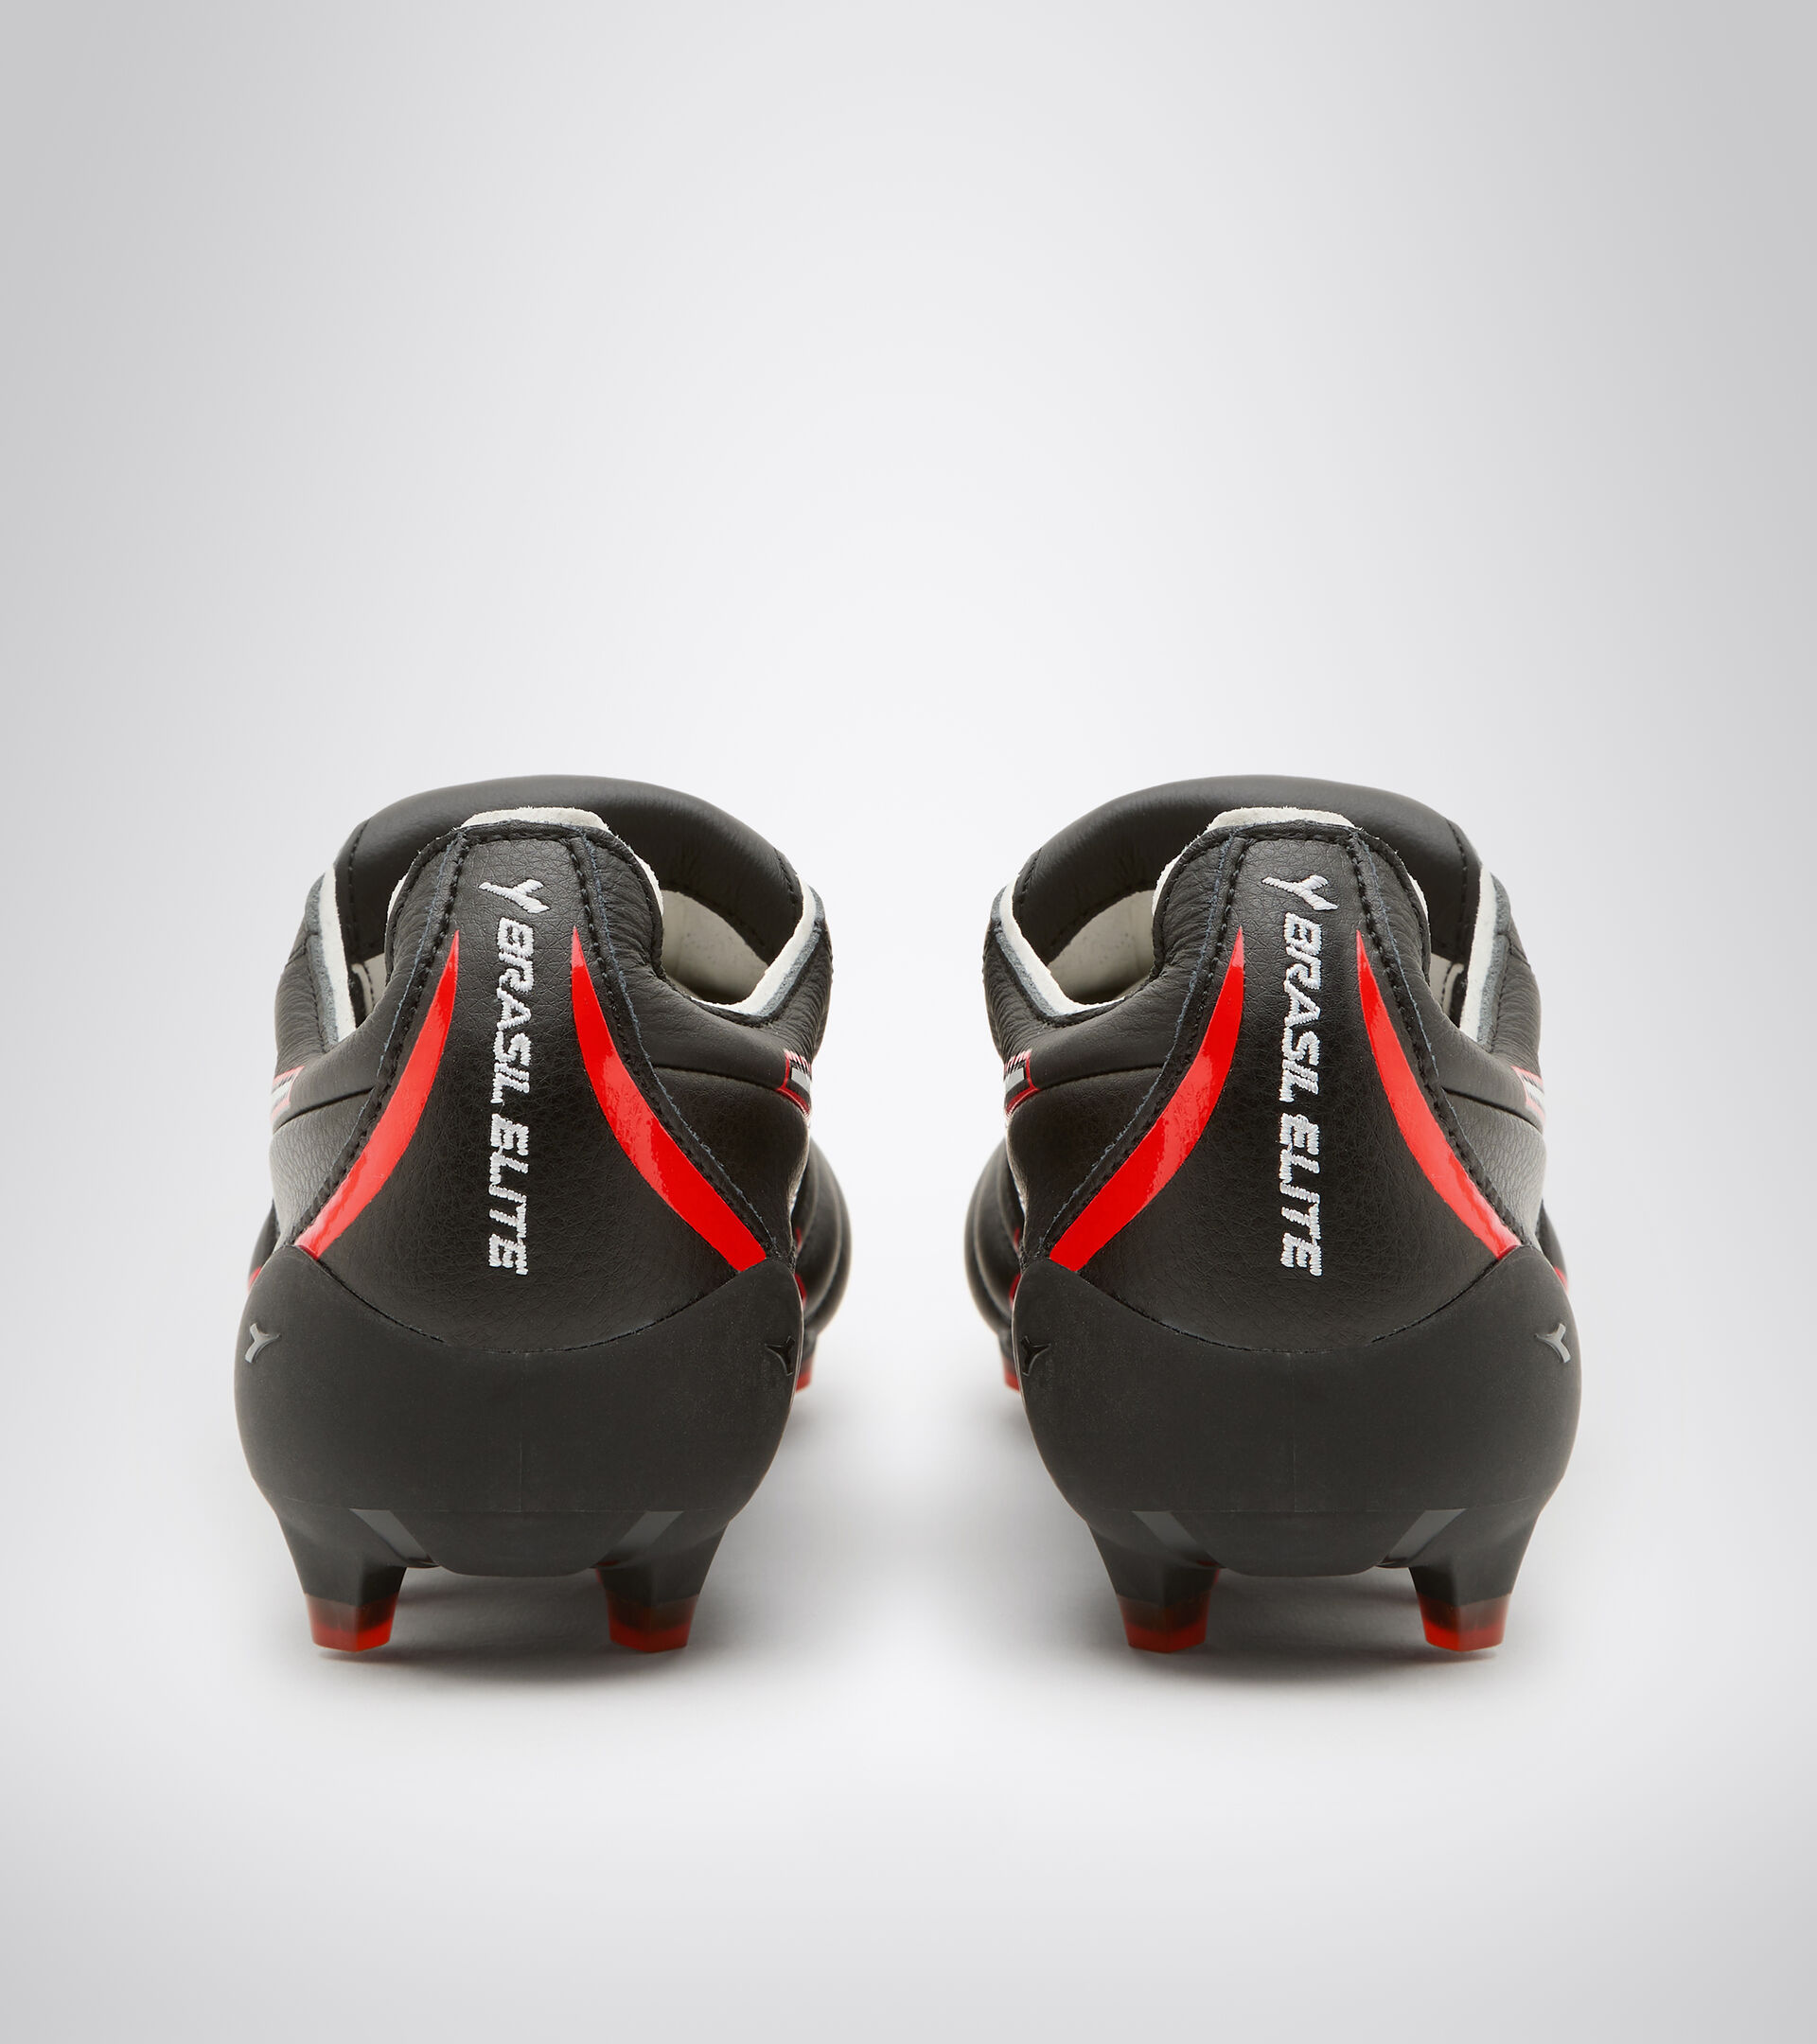 Chaussures de football pour terrains compacts - Made in Italy BRASIL ELITE TECH T ITA LPX NOIR/BLANC/ROUGE FLUO - Diadora